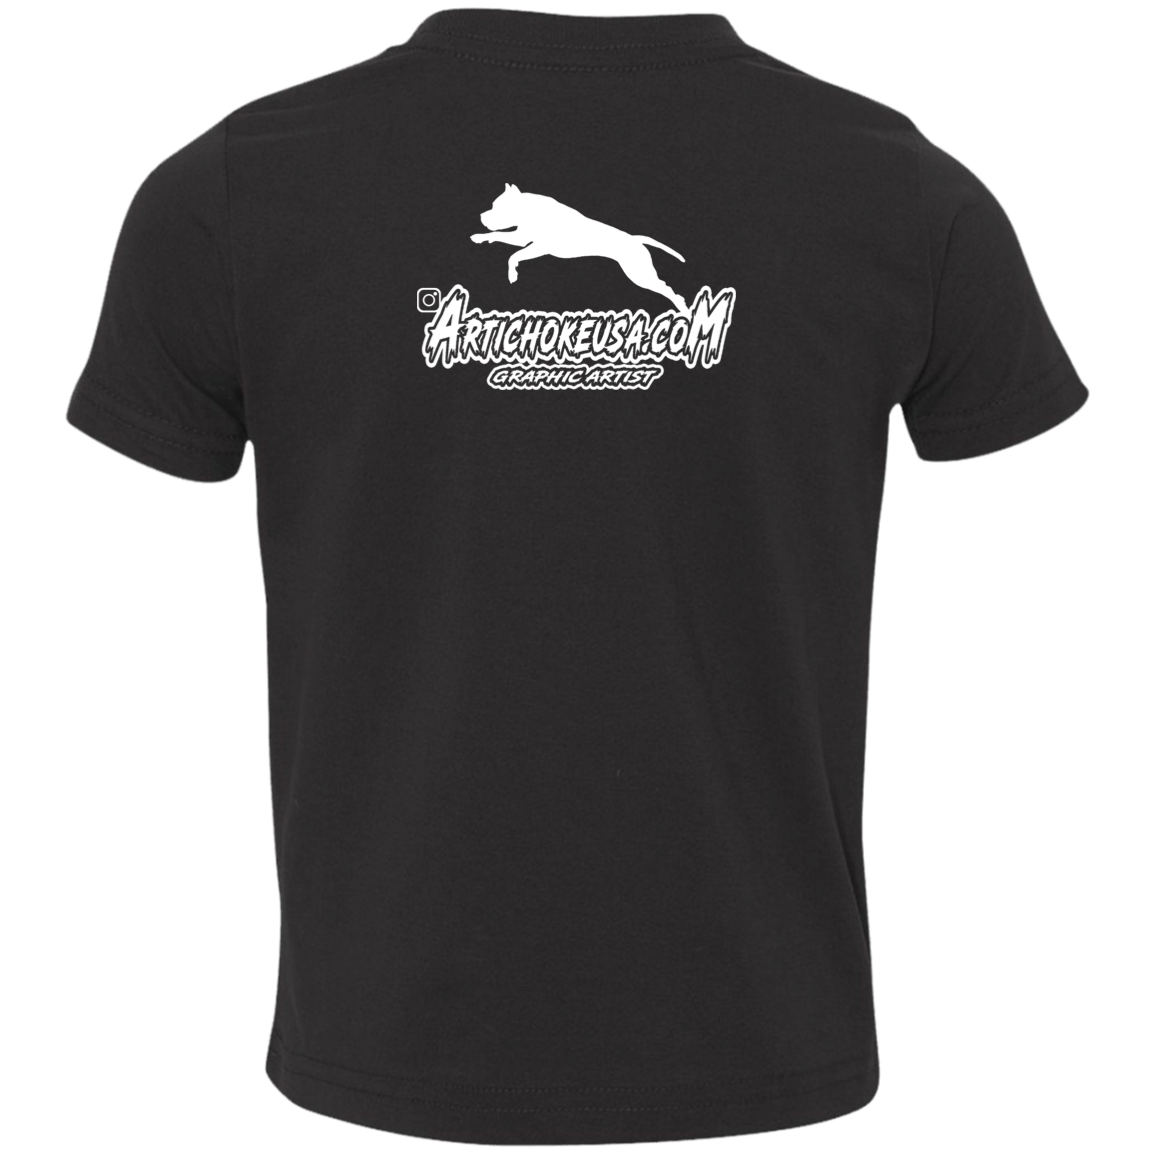 ArtichokeUSA Custom Design. Ruffing the Passer. Pitbull Edition. Male Version. Toddler Jersey T-Shirt